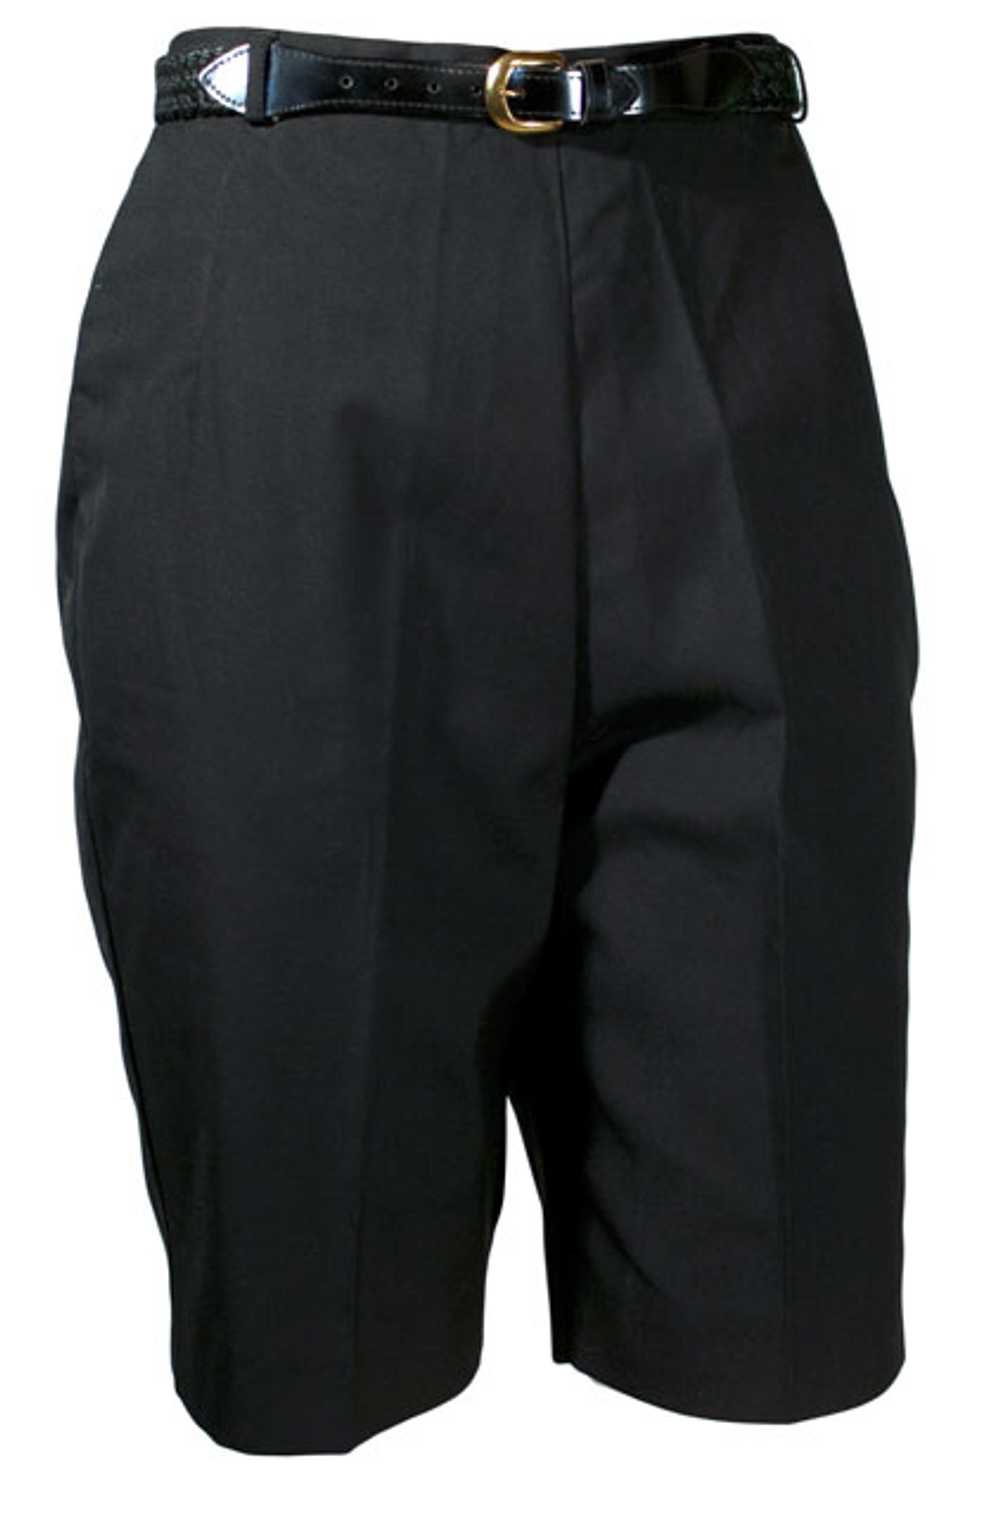 NOS 1950s Sporty Black Shorts - image 2